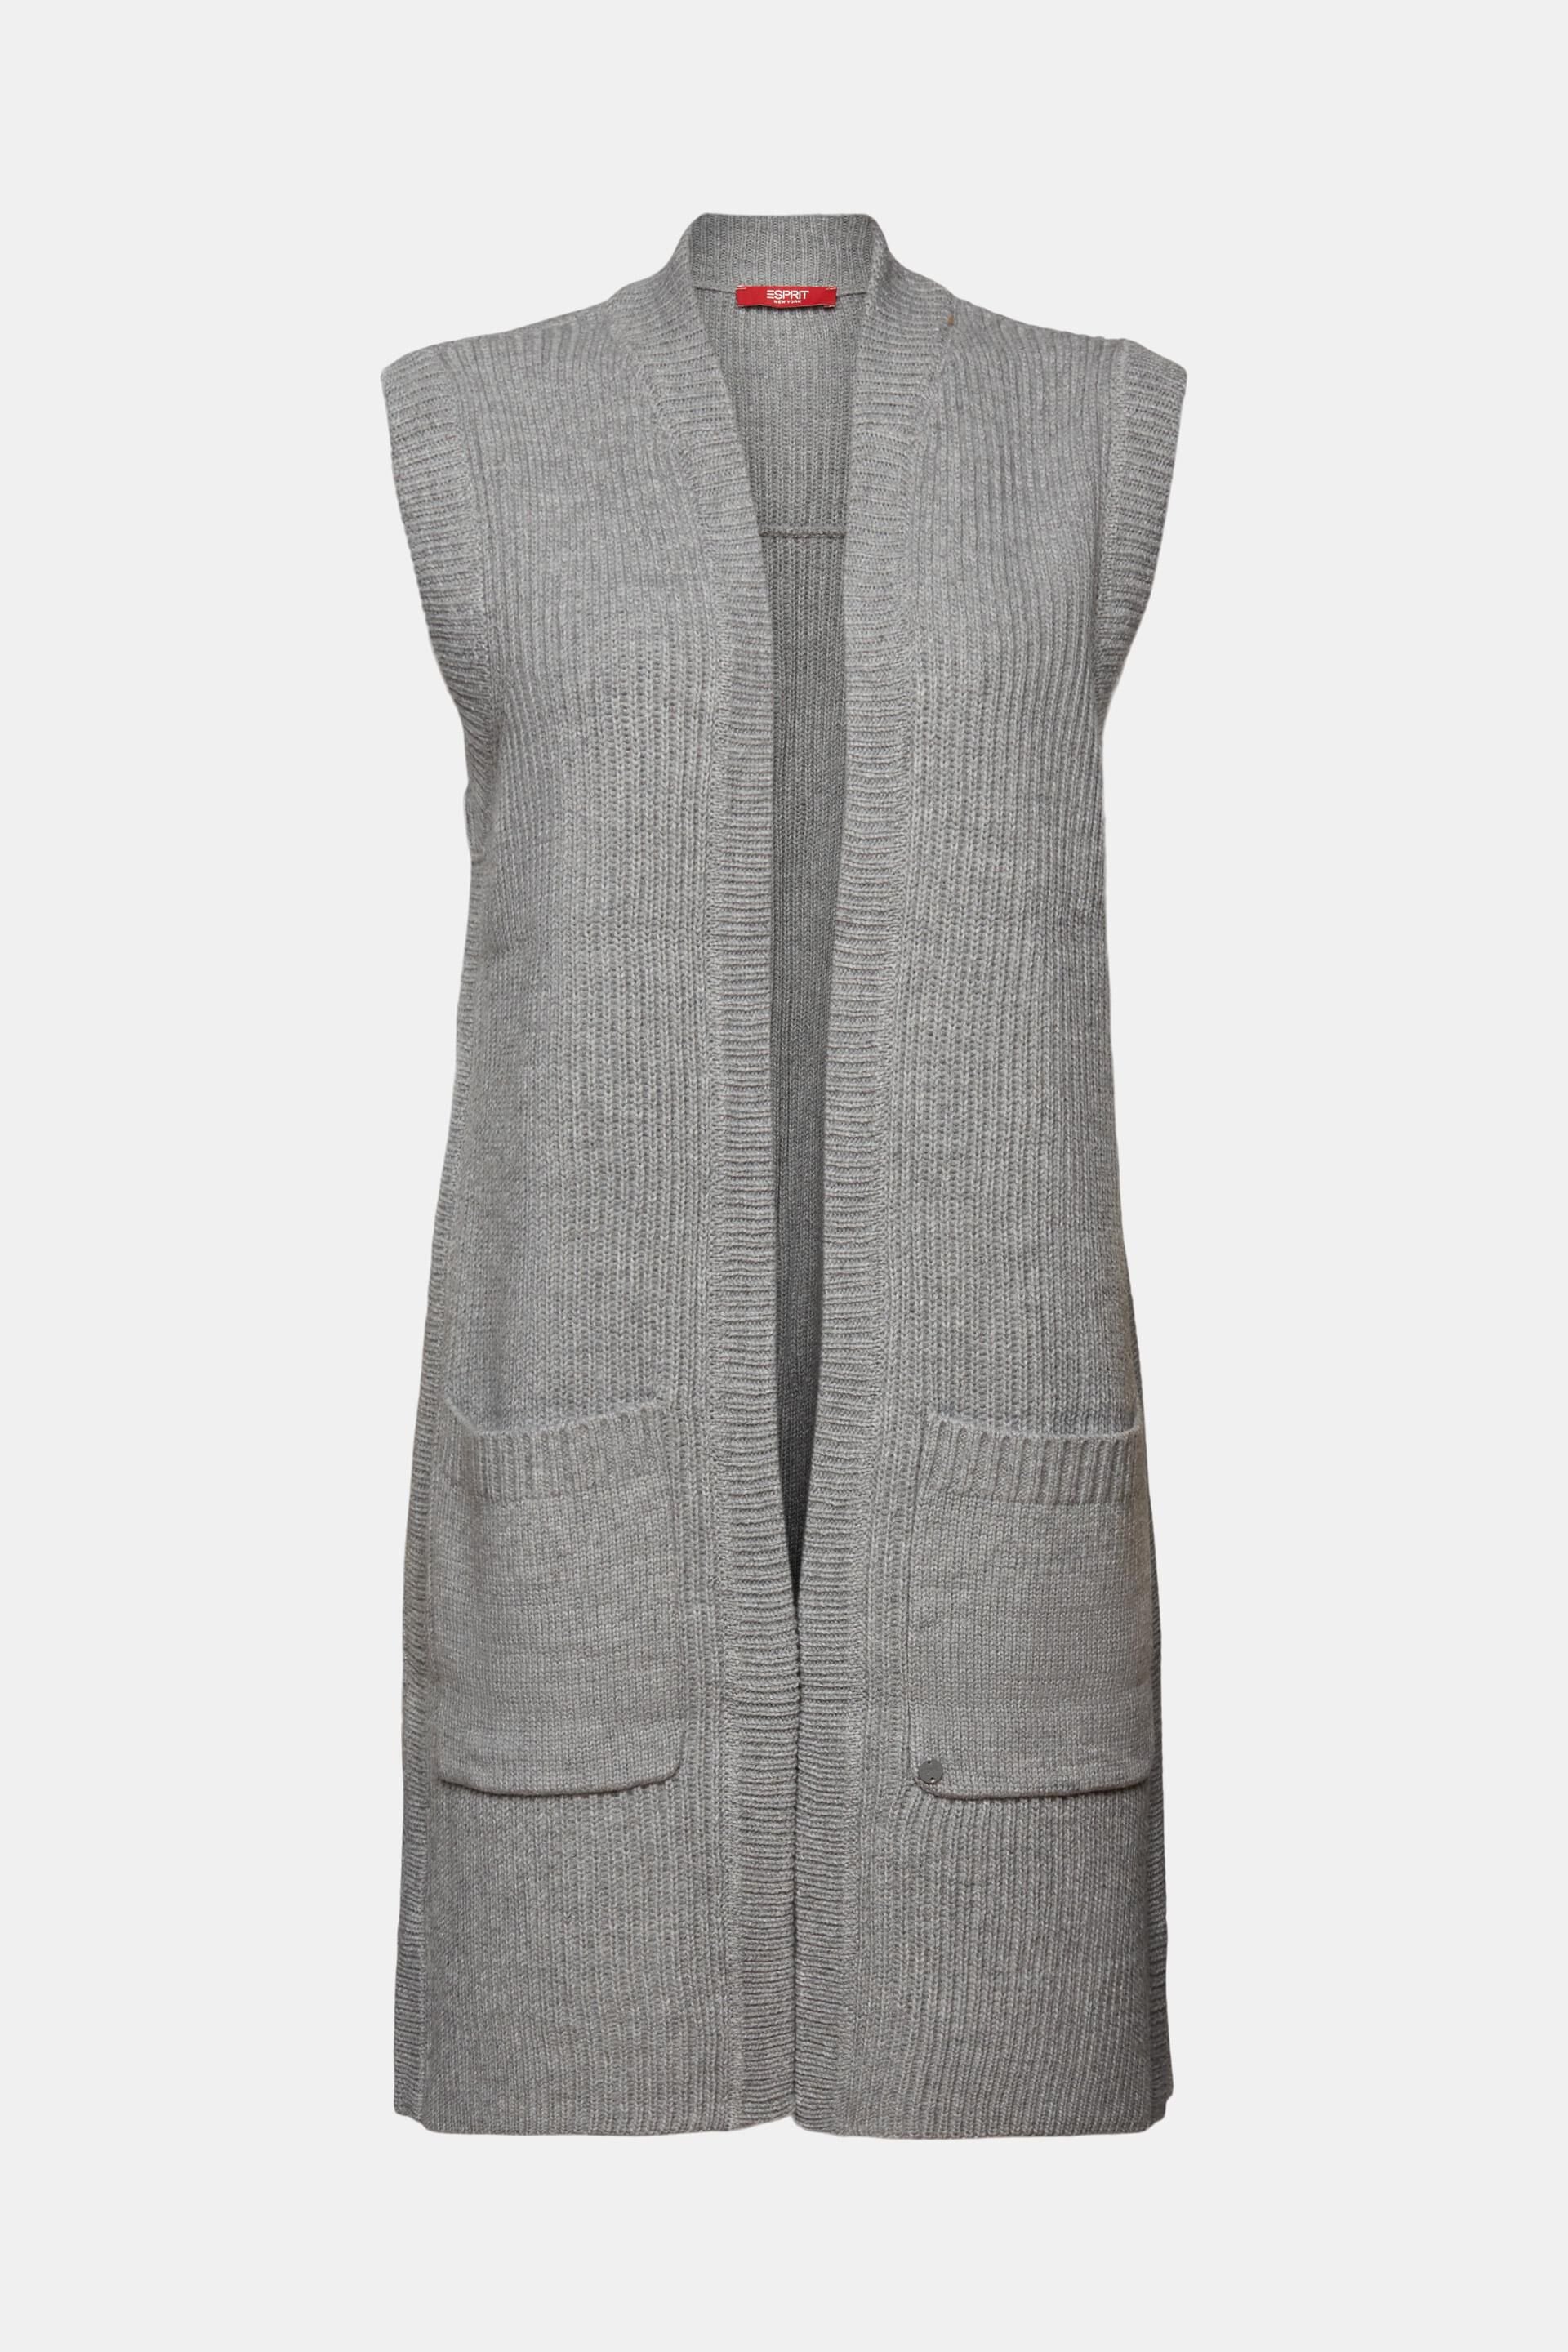 Esprit cardigan sleeveless longline Recycled: